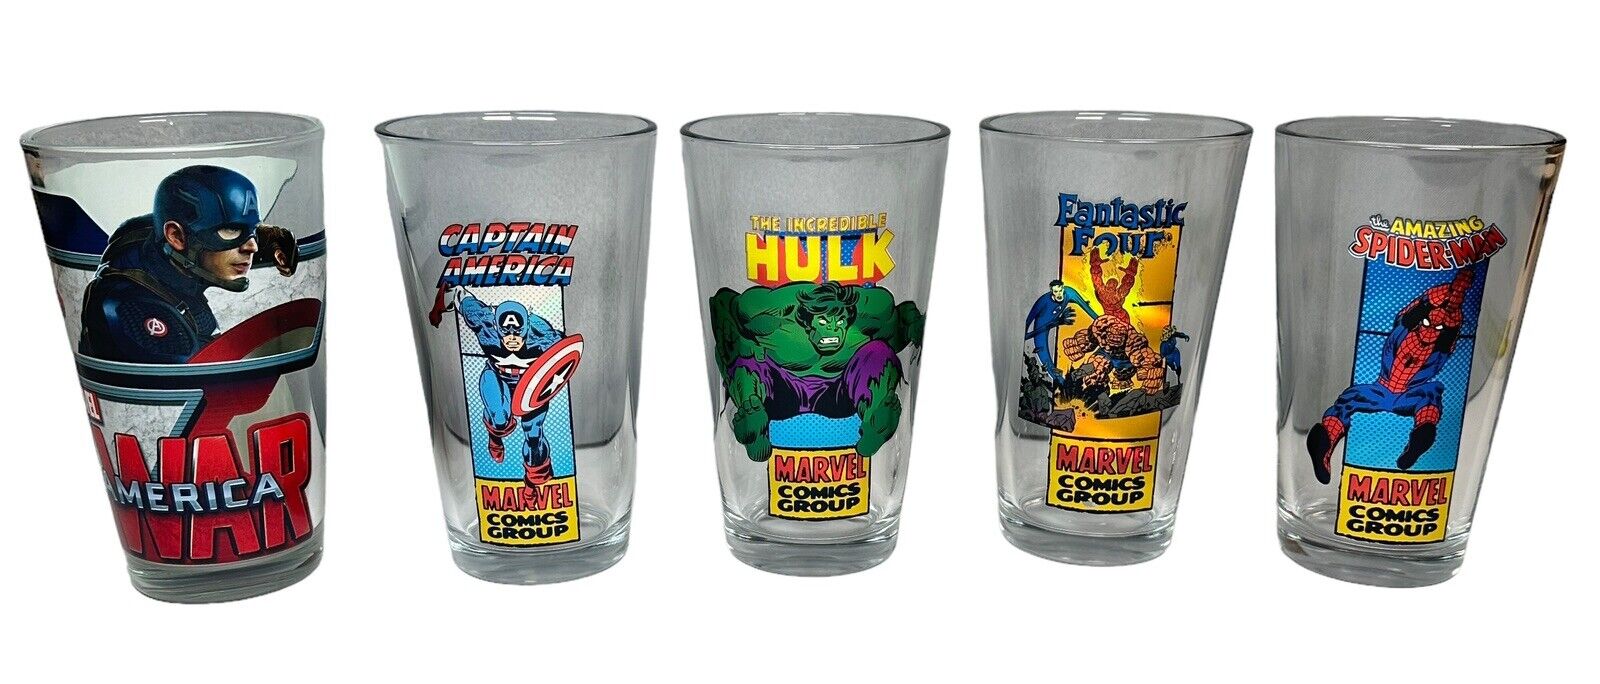 Lot of 5 Marvel Comics 16 Oz Tumblers Glasses Captain America Spiderman Fantas 4